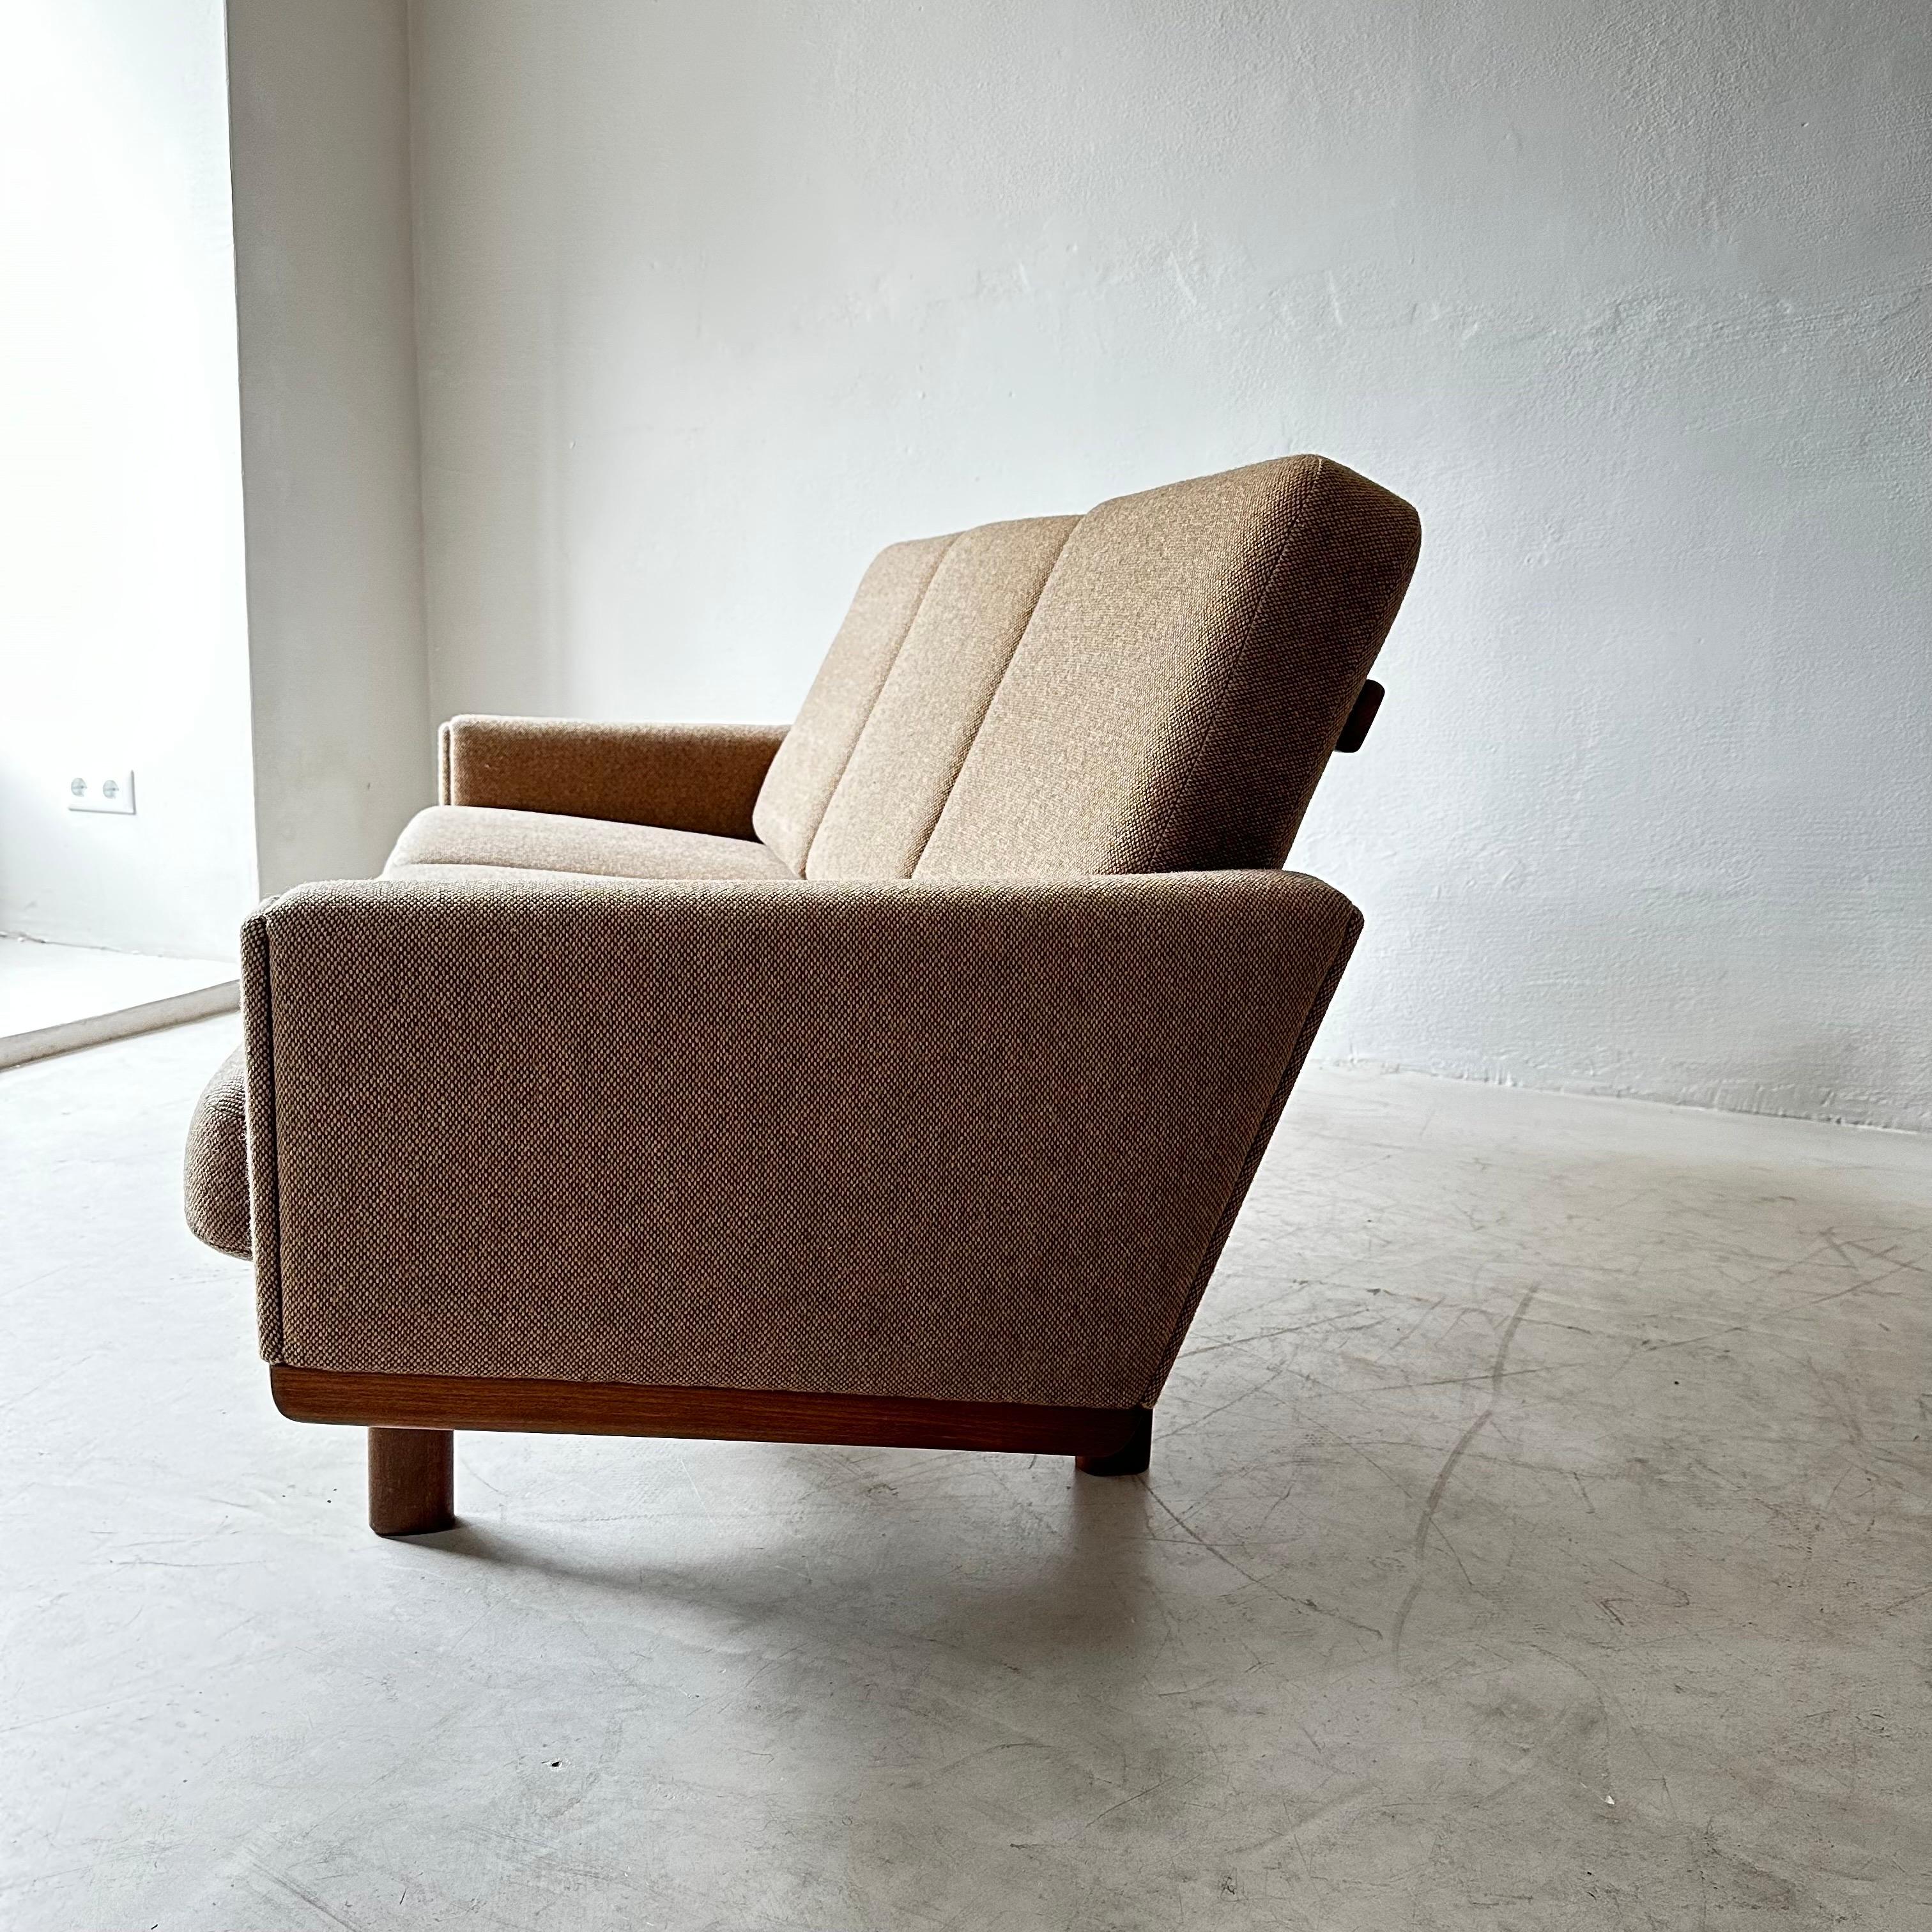 Mid-20th Century Three-Seat Teak-Framed Sofa, Model GE-236, by Hans Wegner for GETAMA For Sale